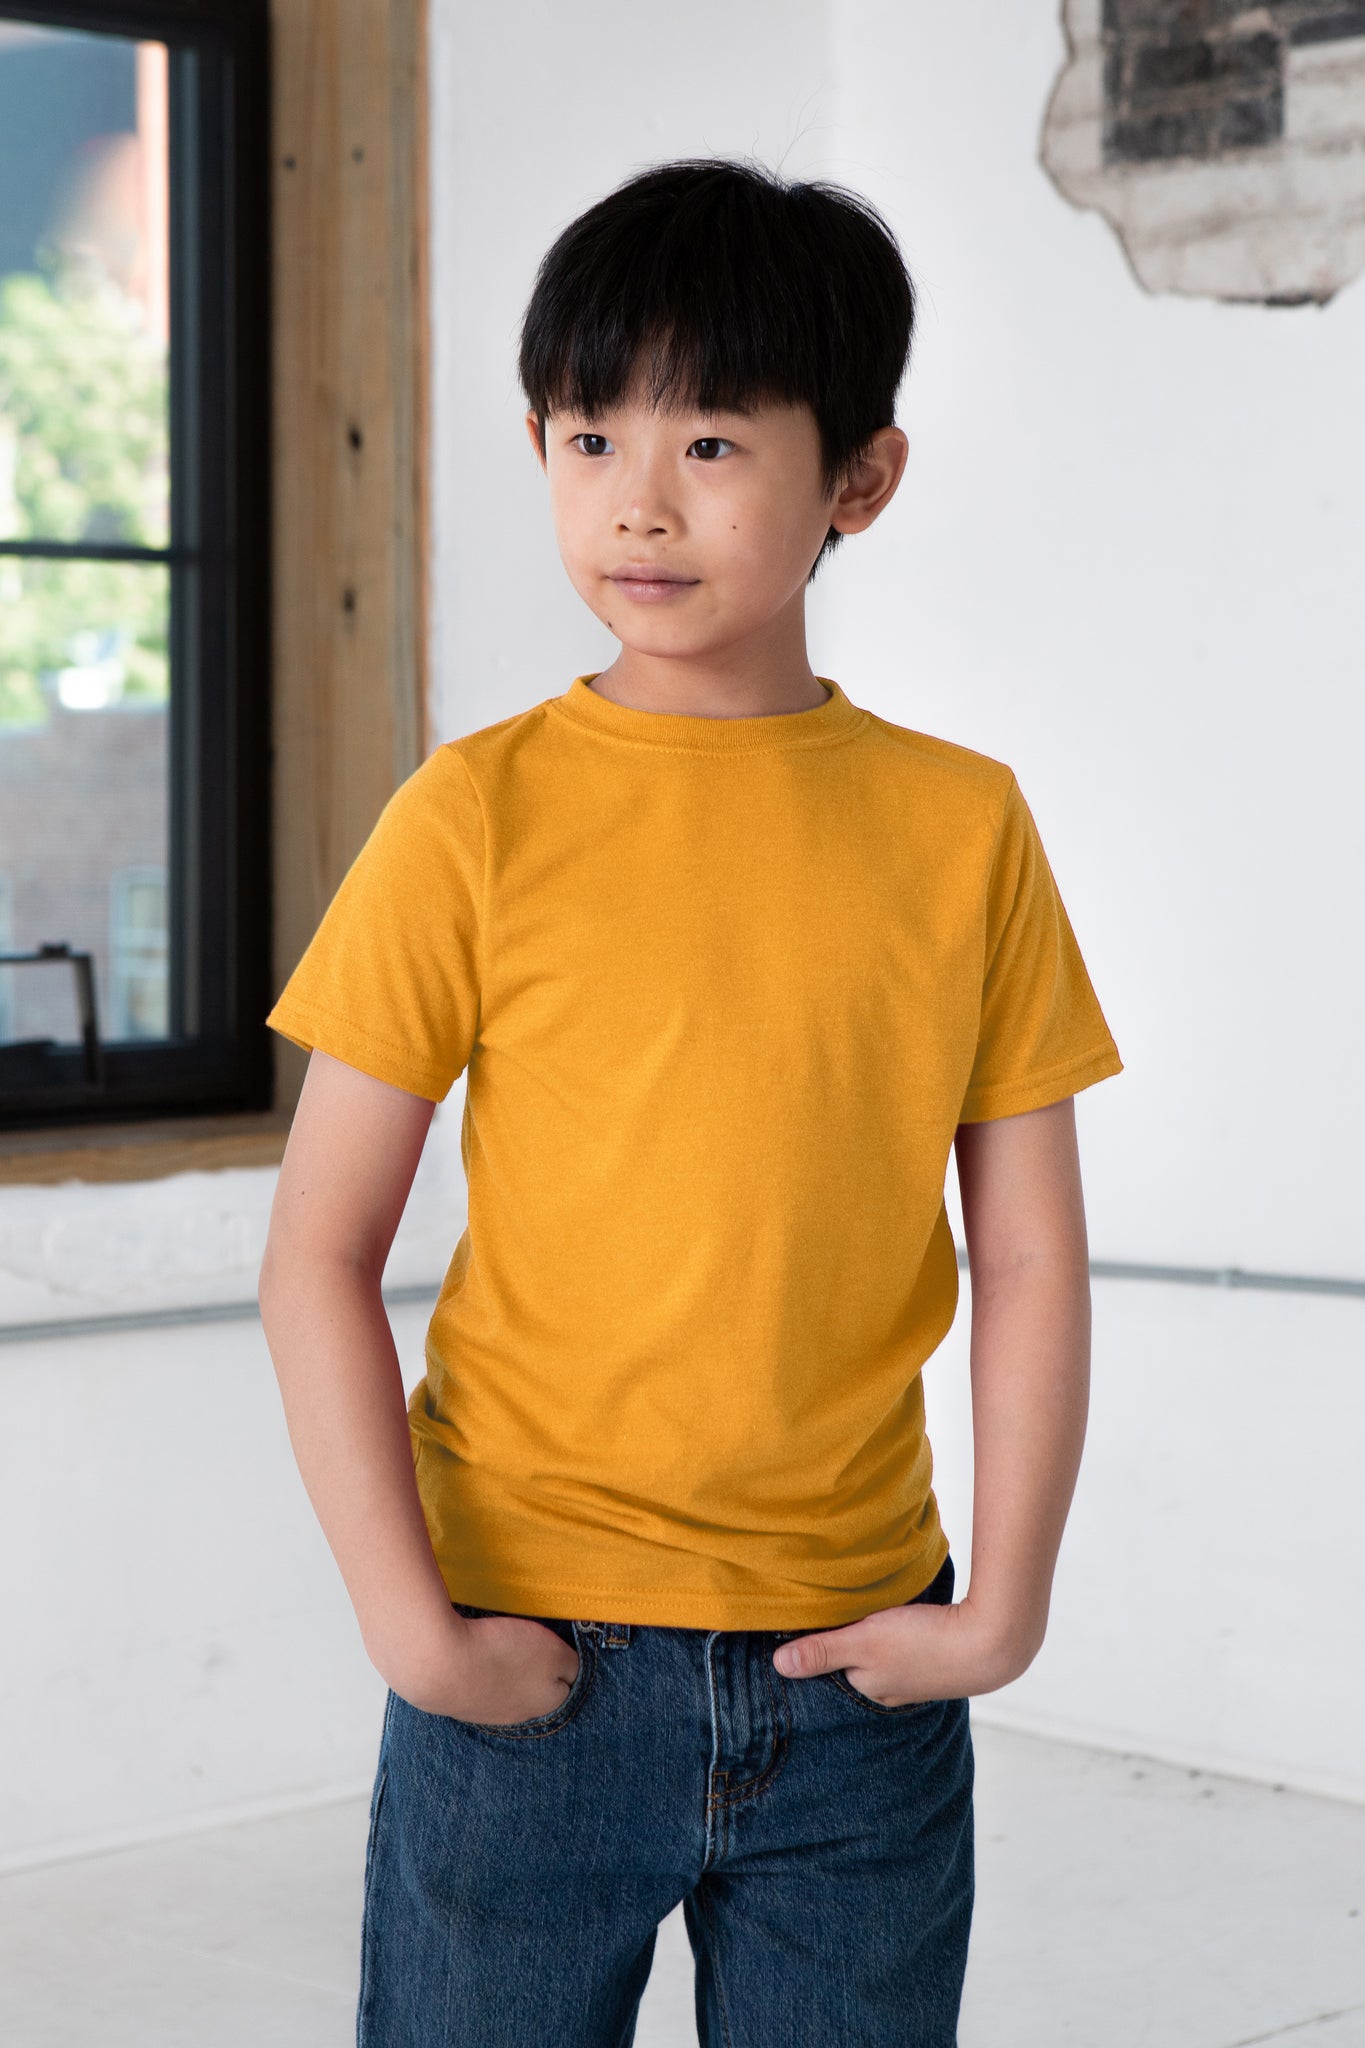 Boy Model wearing GOEX Youth Cotton Tee in Marigold